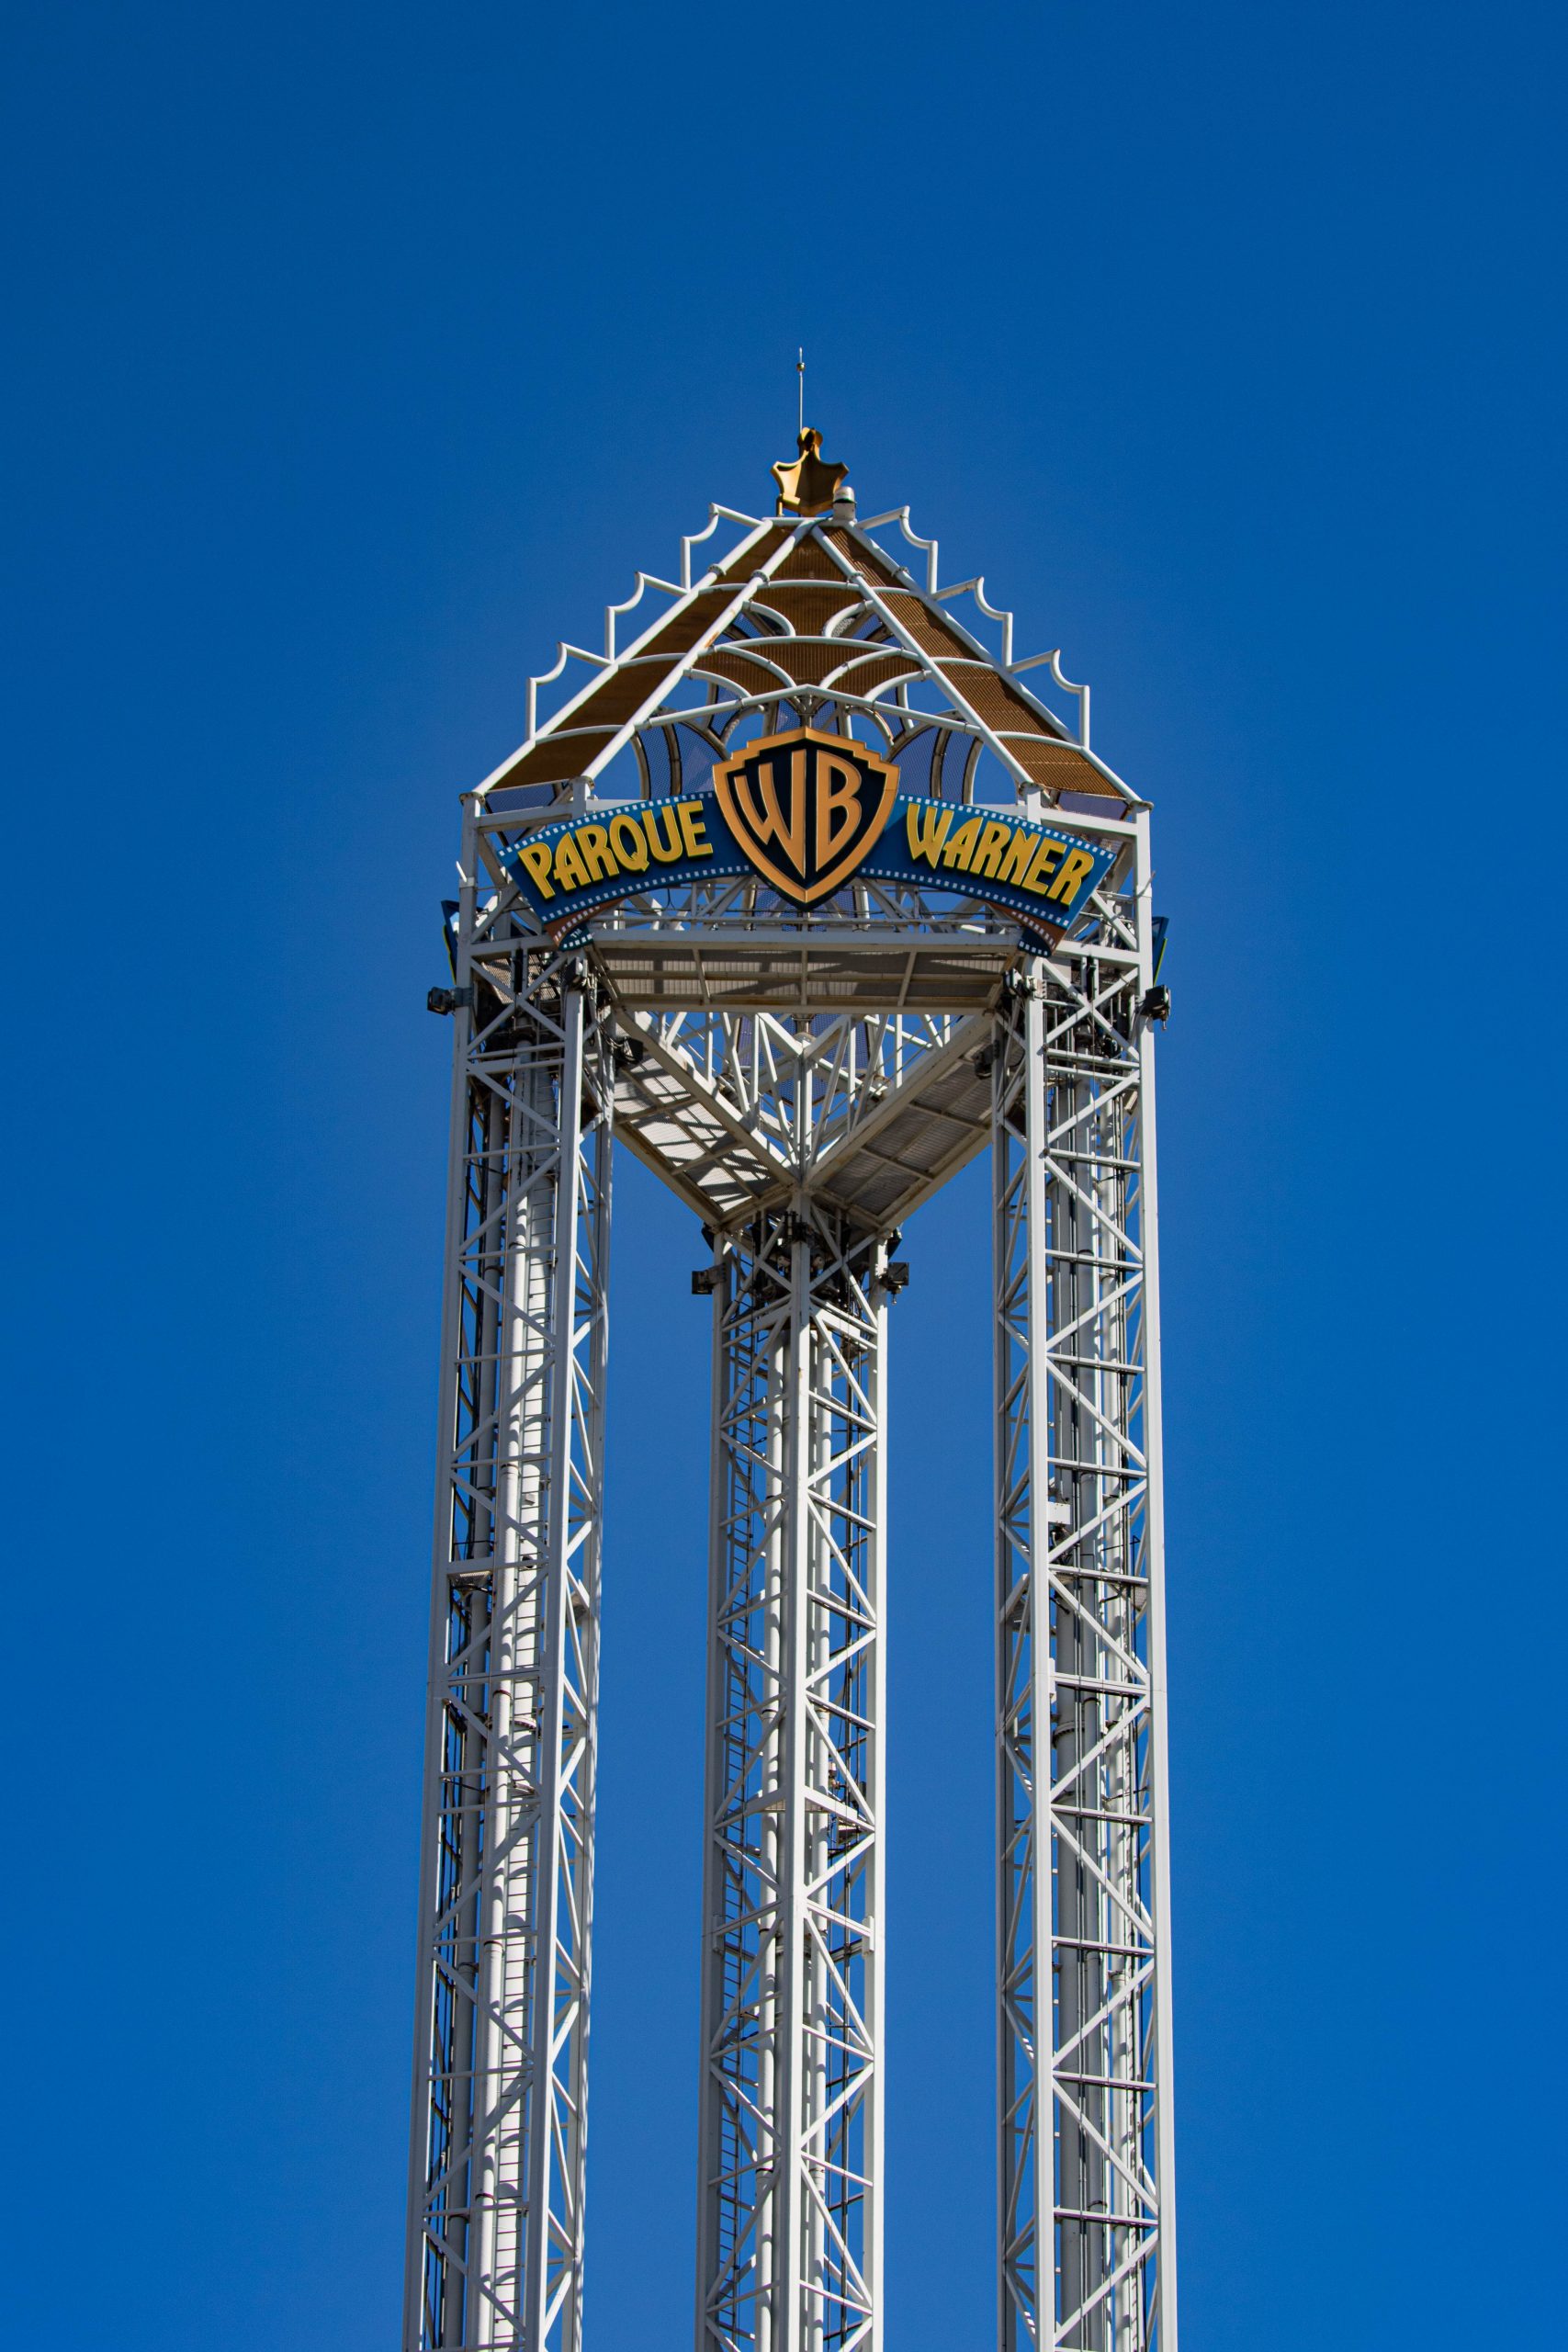 Spanish Theme Park History - Part 7: Parque Warner - Coaster Kings